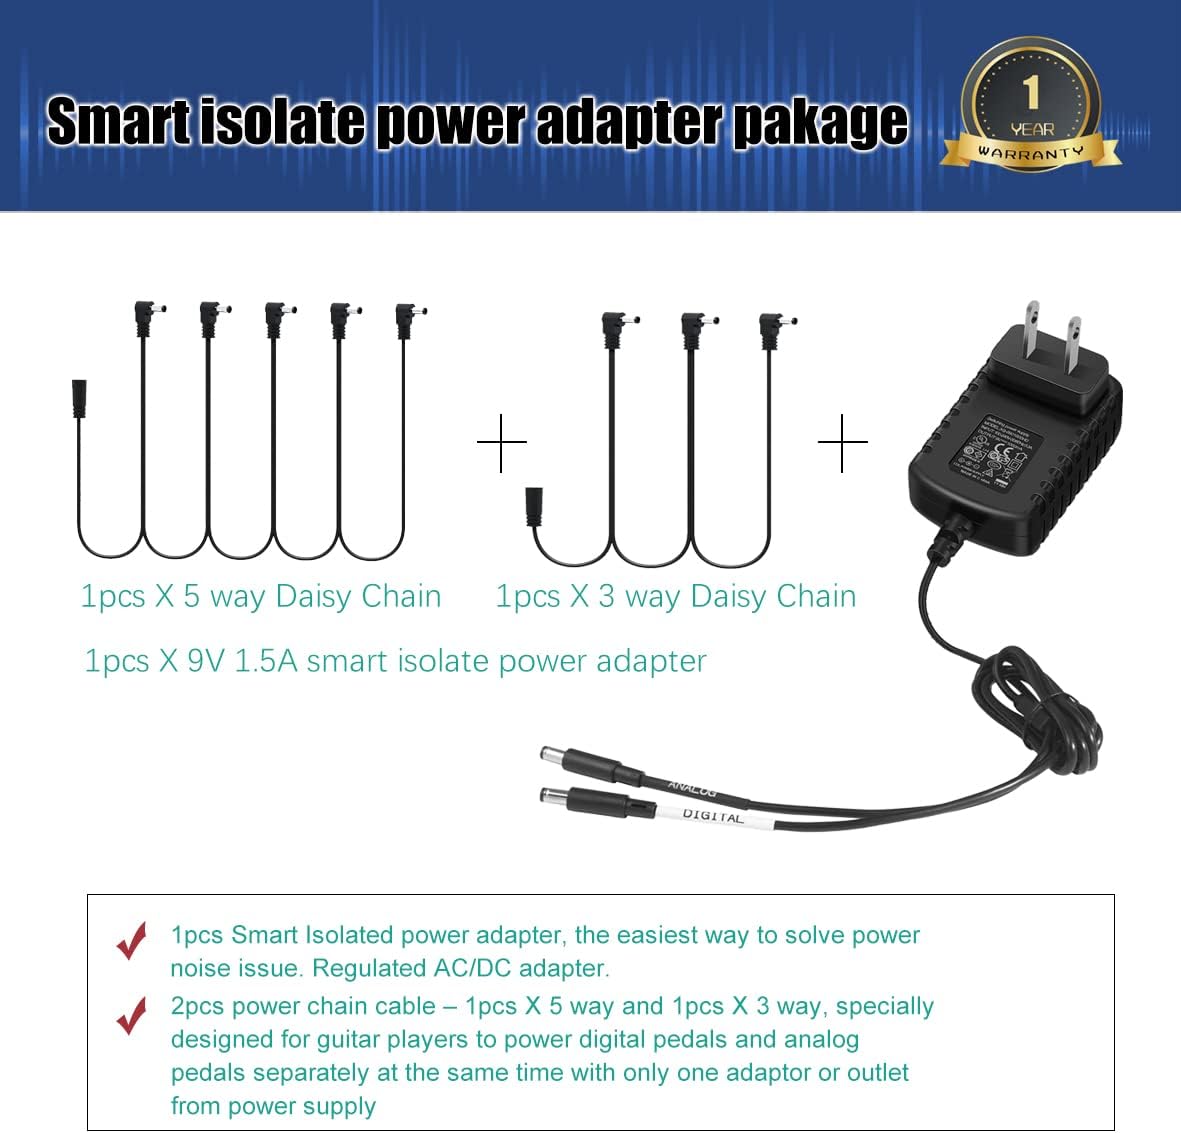 Smart Isolated Power Adaptor (SIPA-1000)